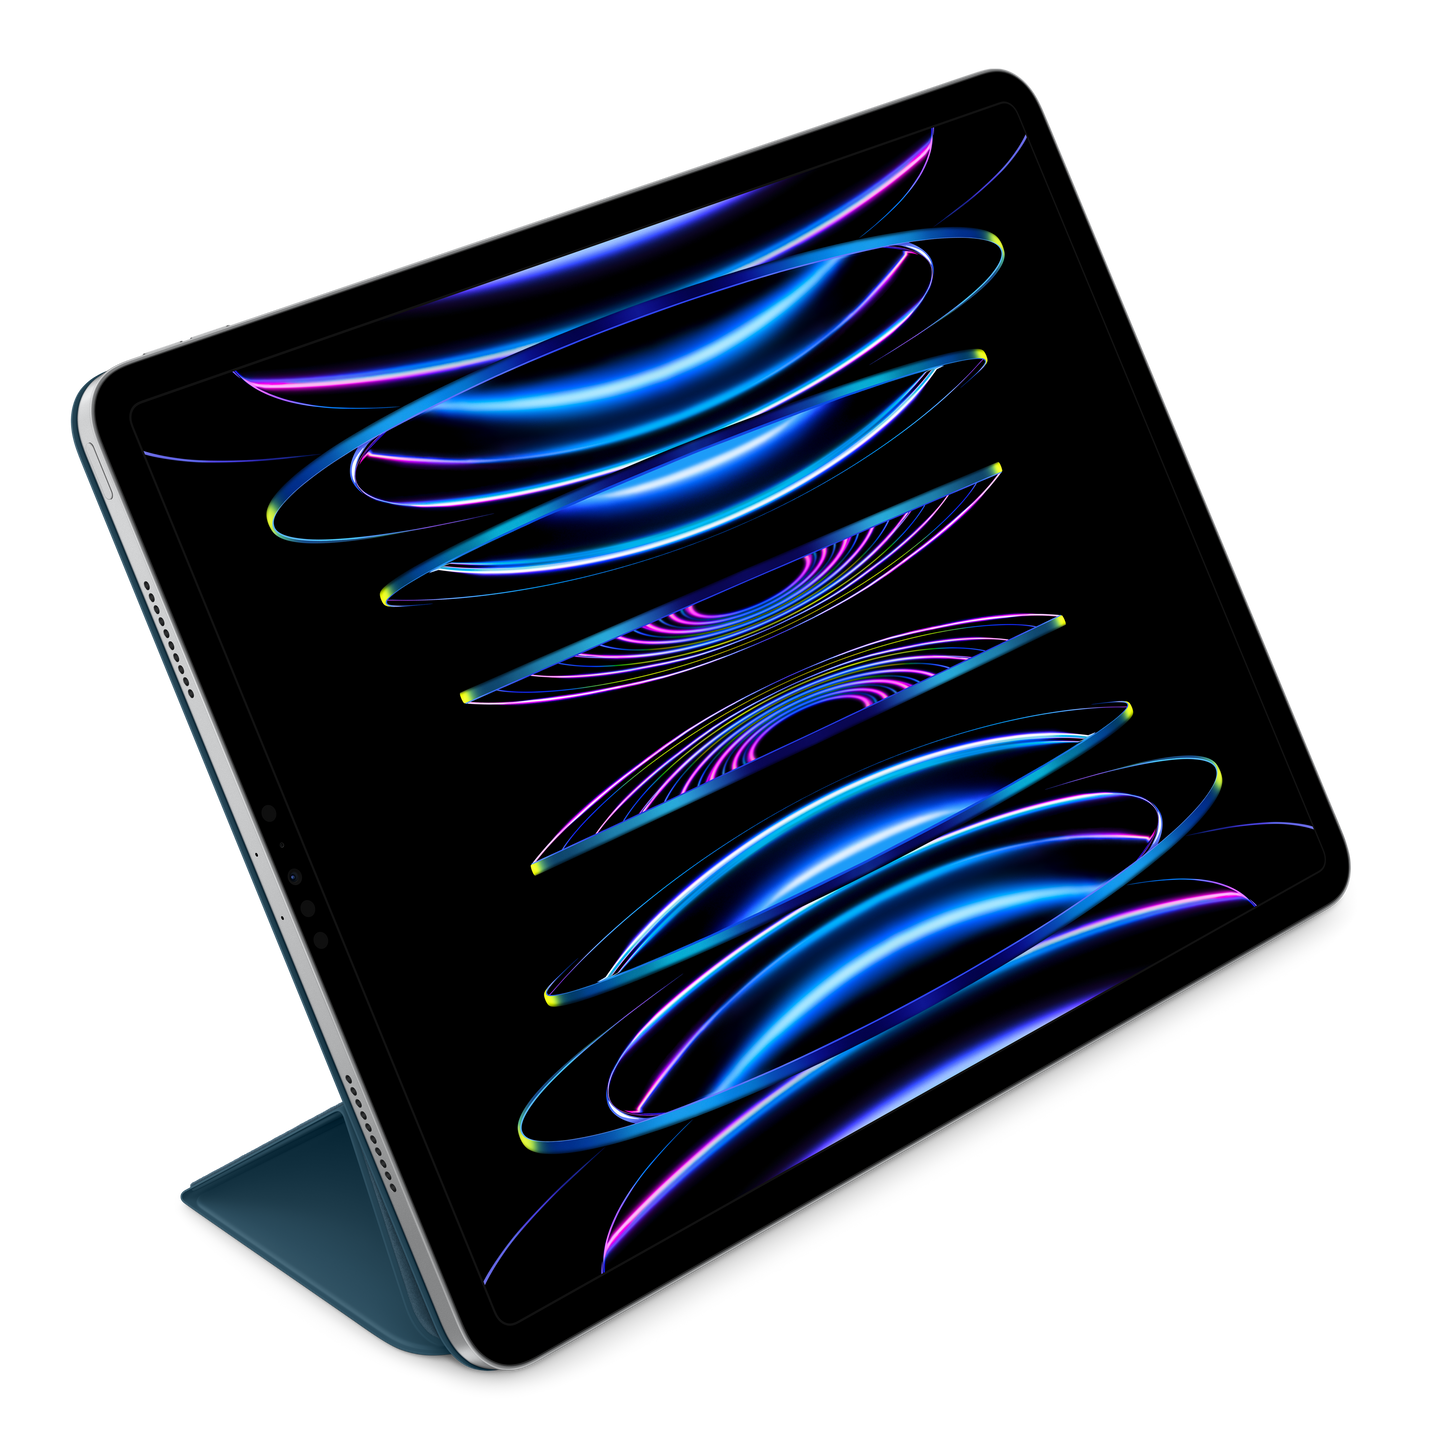 Apple Smart Folio iPad Pro 12.9 (6th Gen) Marine Blue